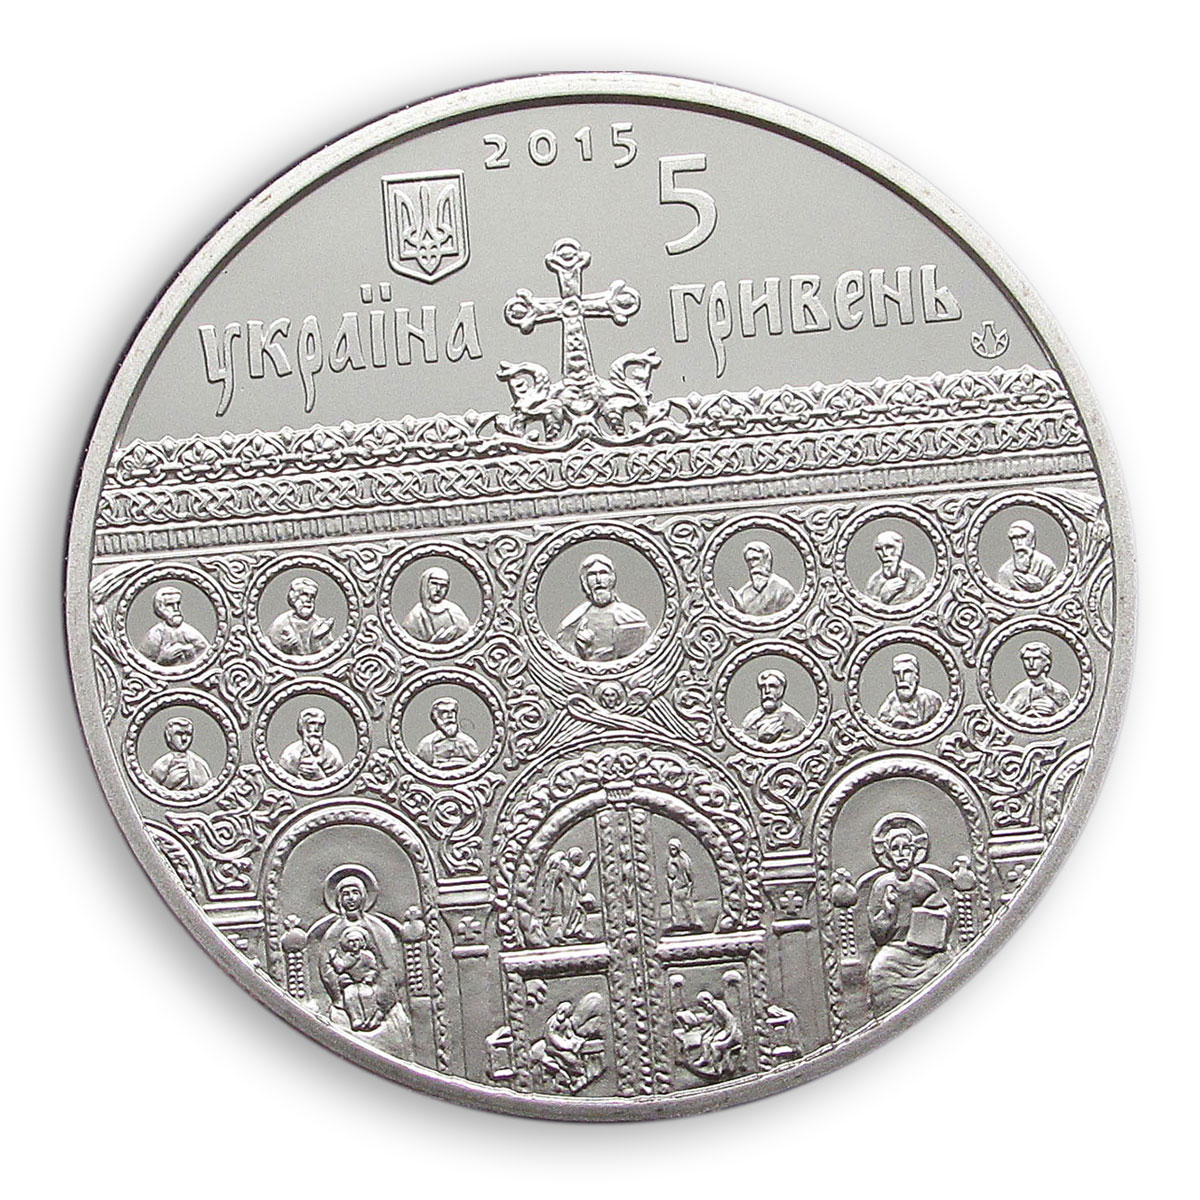 Ukraine 5 hryvnia Dormition Cathedral in Volodymyr-Volynskyi nickel coin 2015